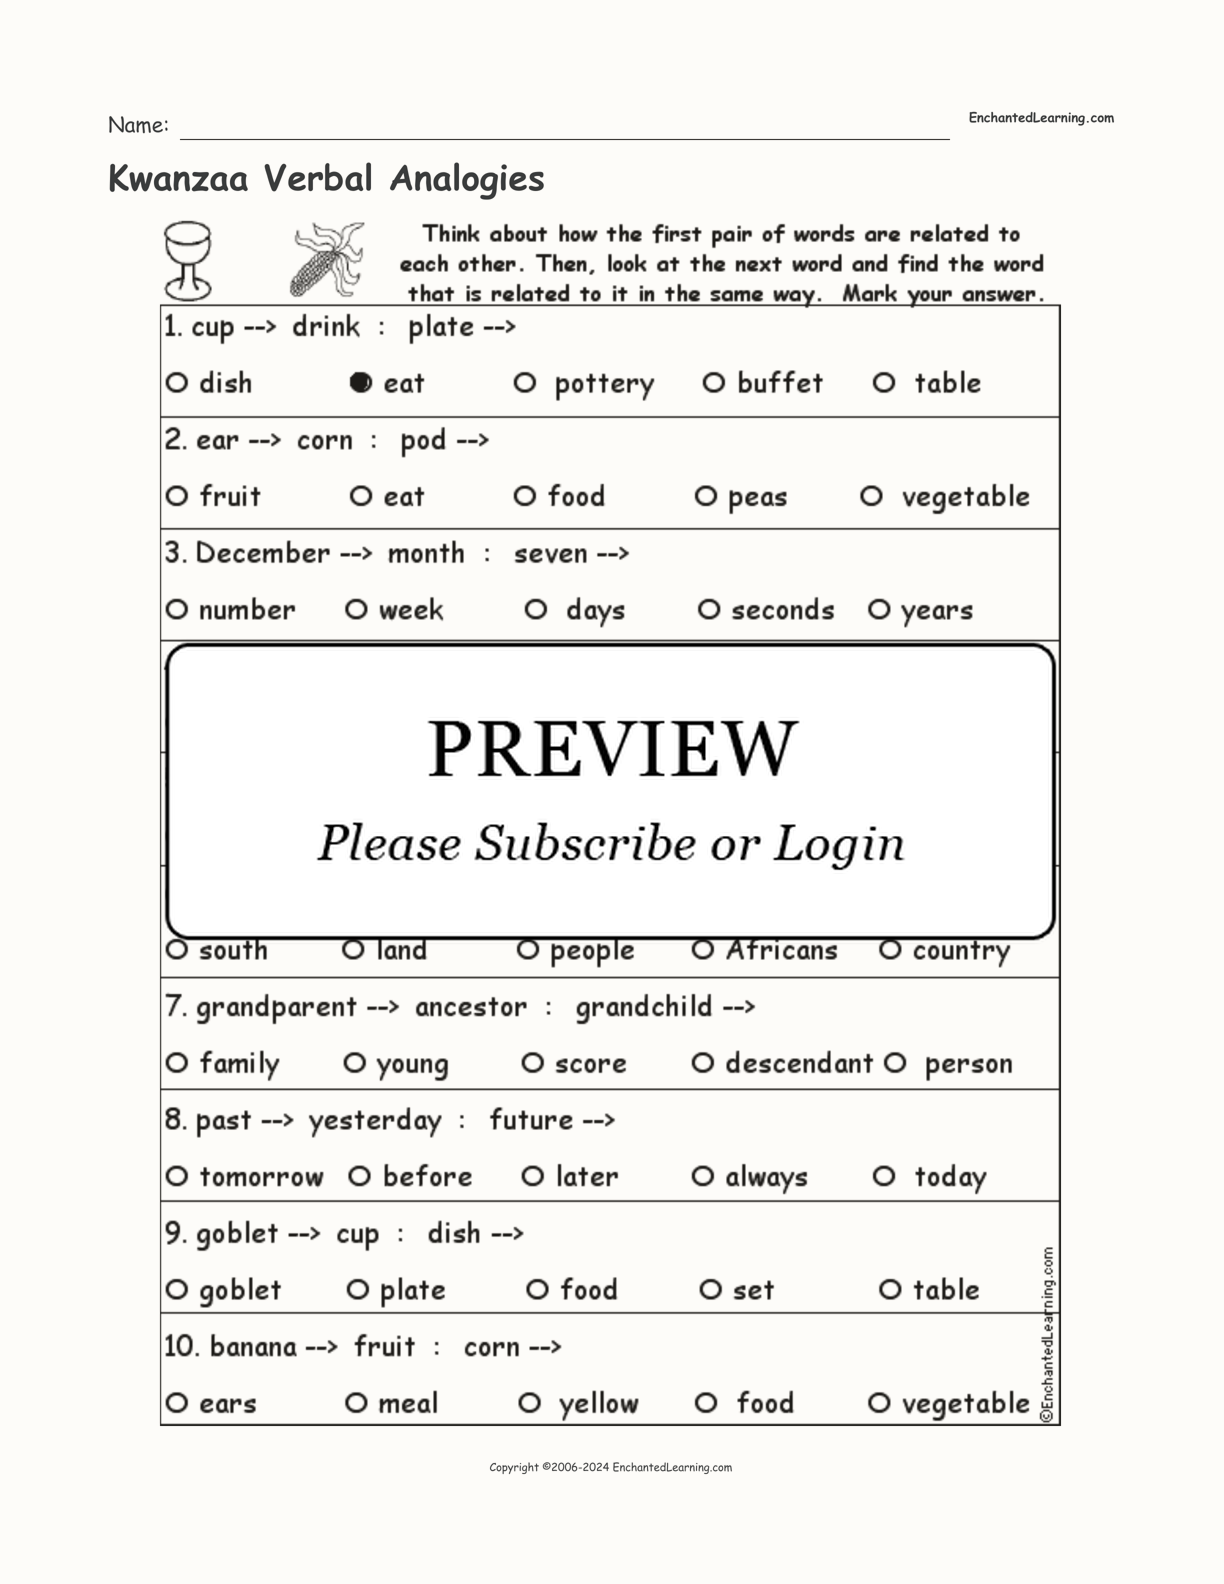 Kwanzaa Verbal Analogies interactive worksheet page 1